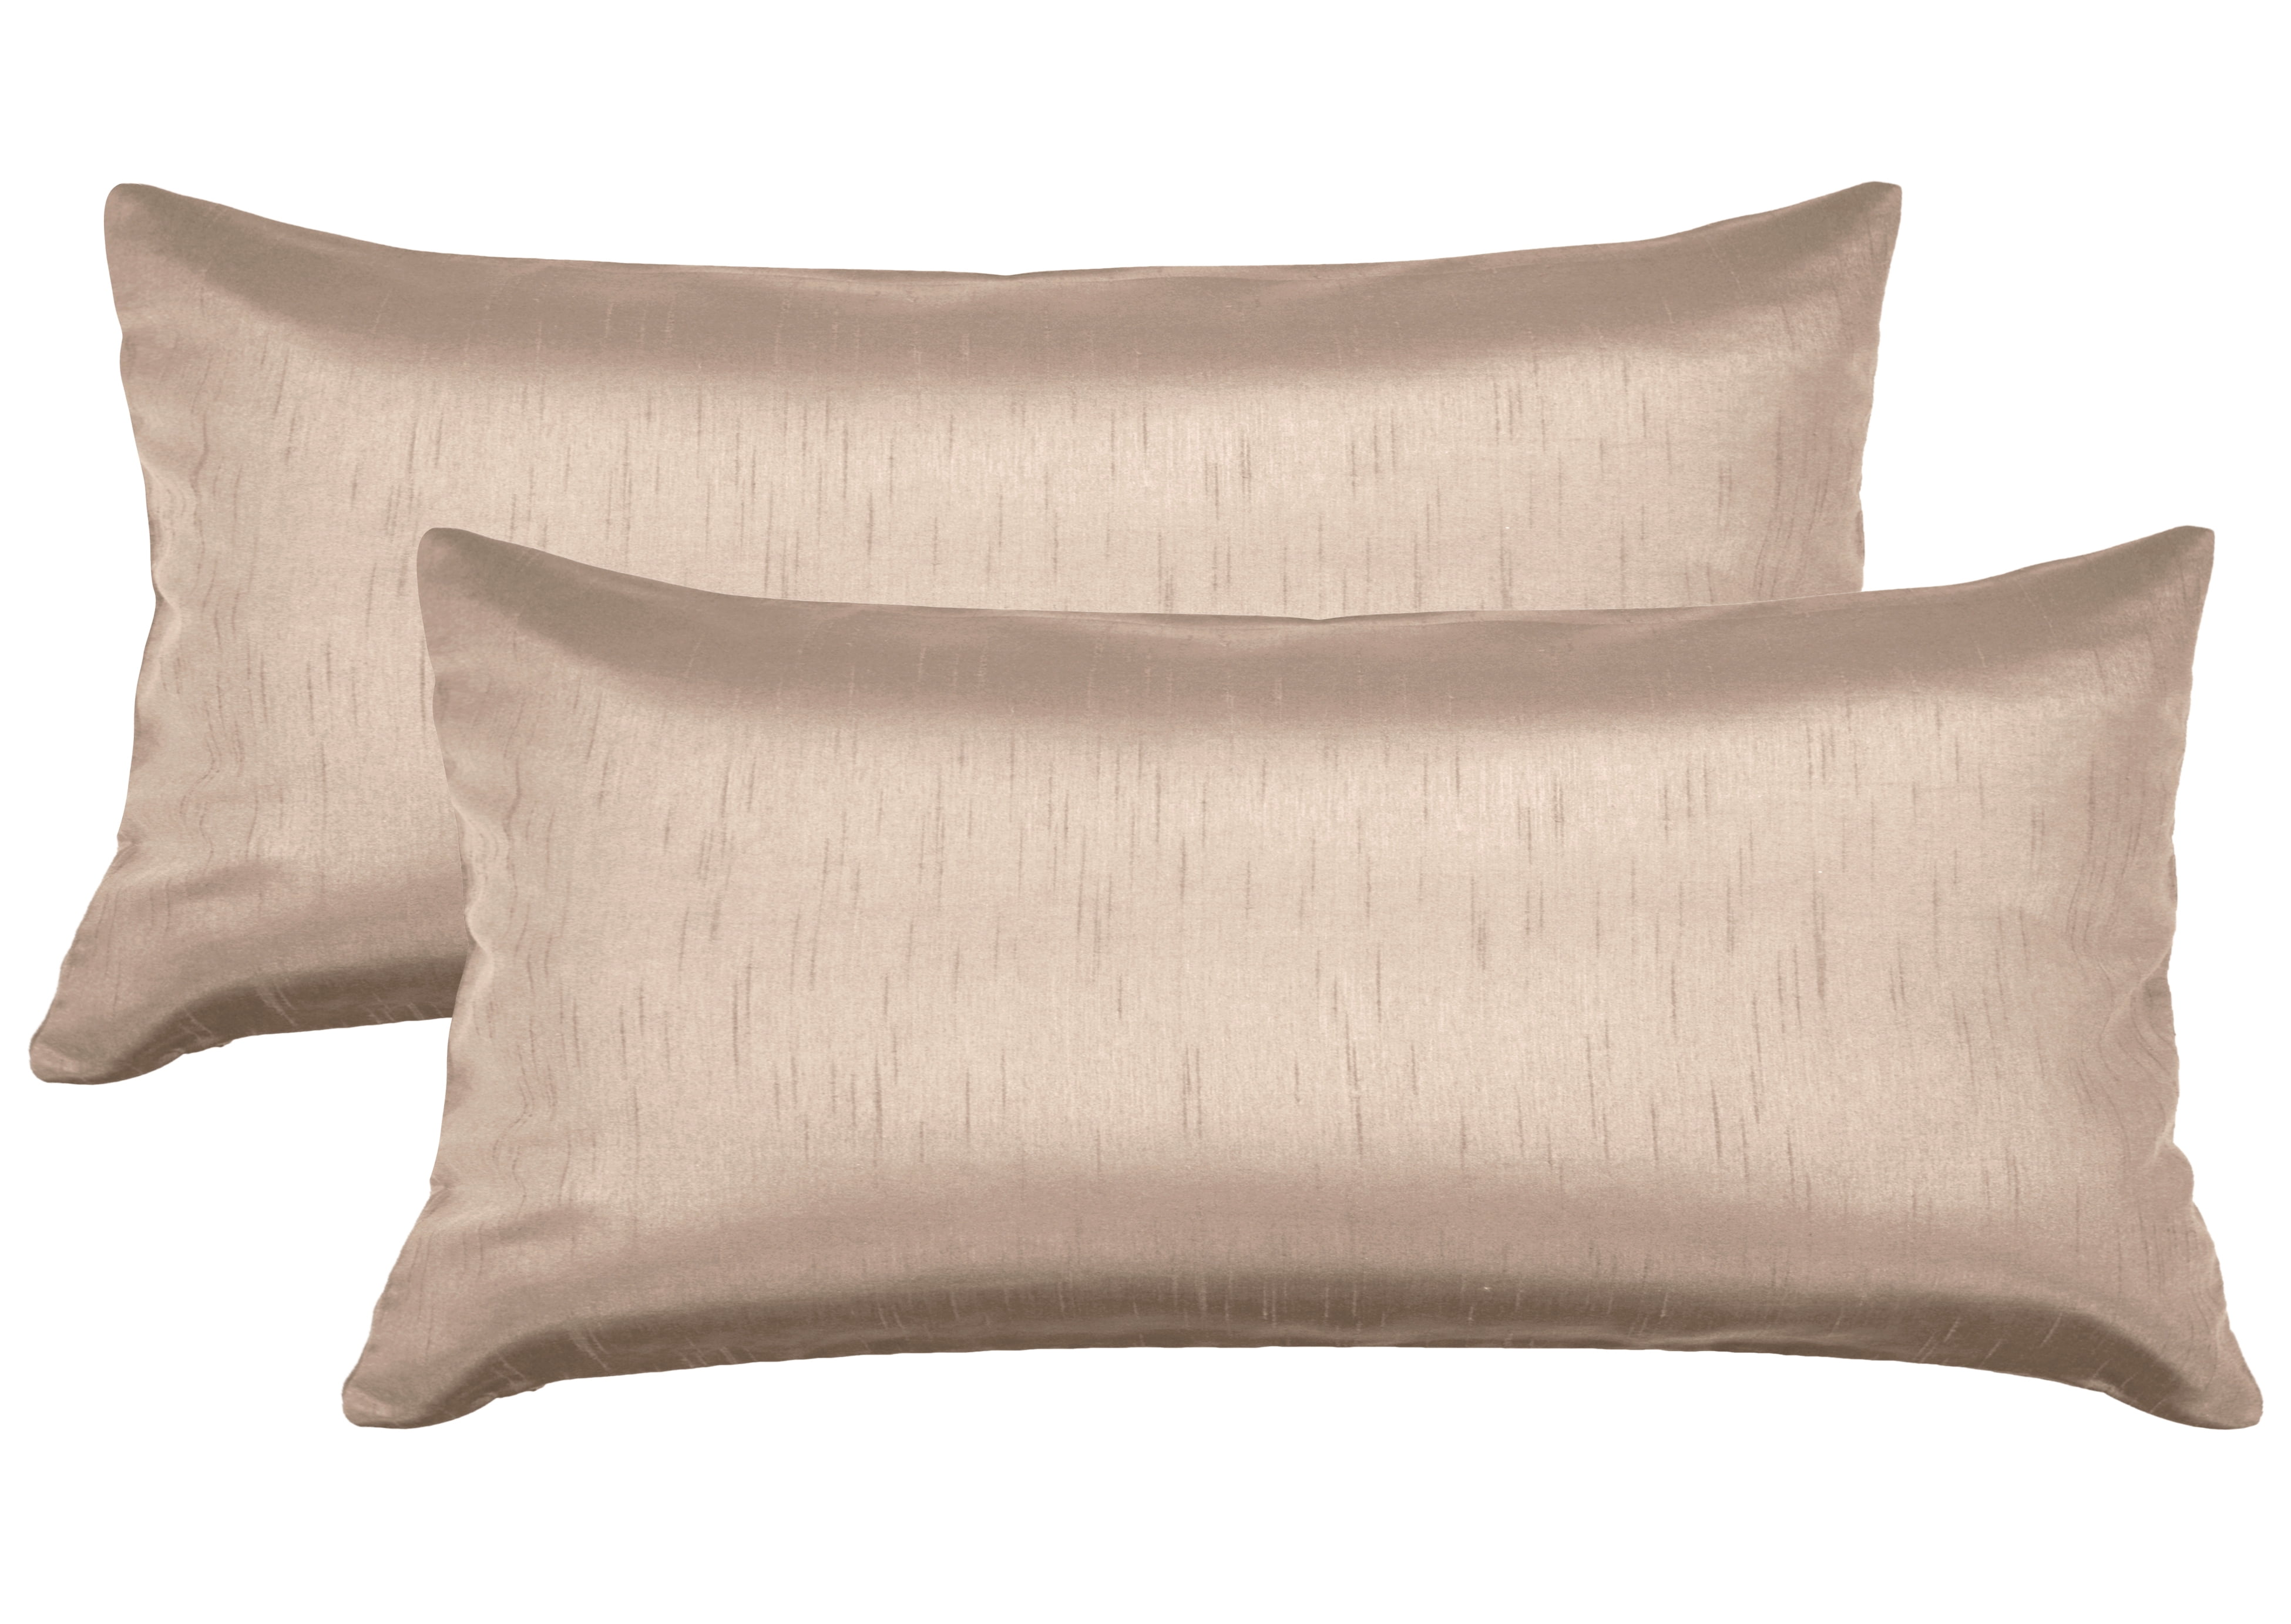 Aiking Home 12x24 Inches Faux Silk Rectangular Throw Pillow Cover, Zipper Closure, Sand (Set of